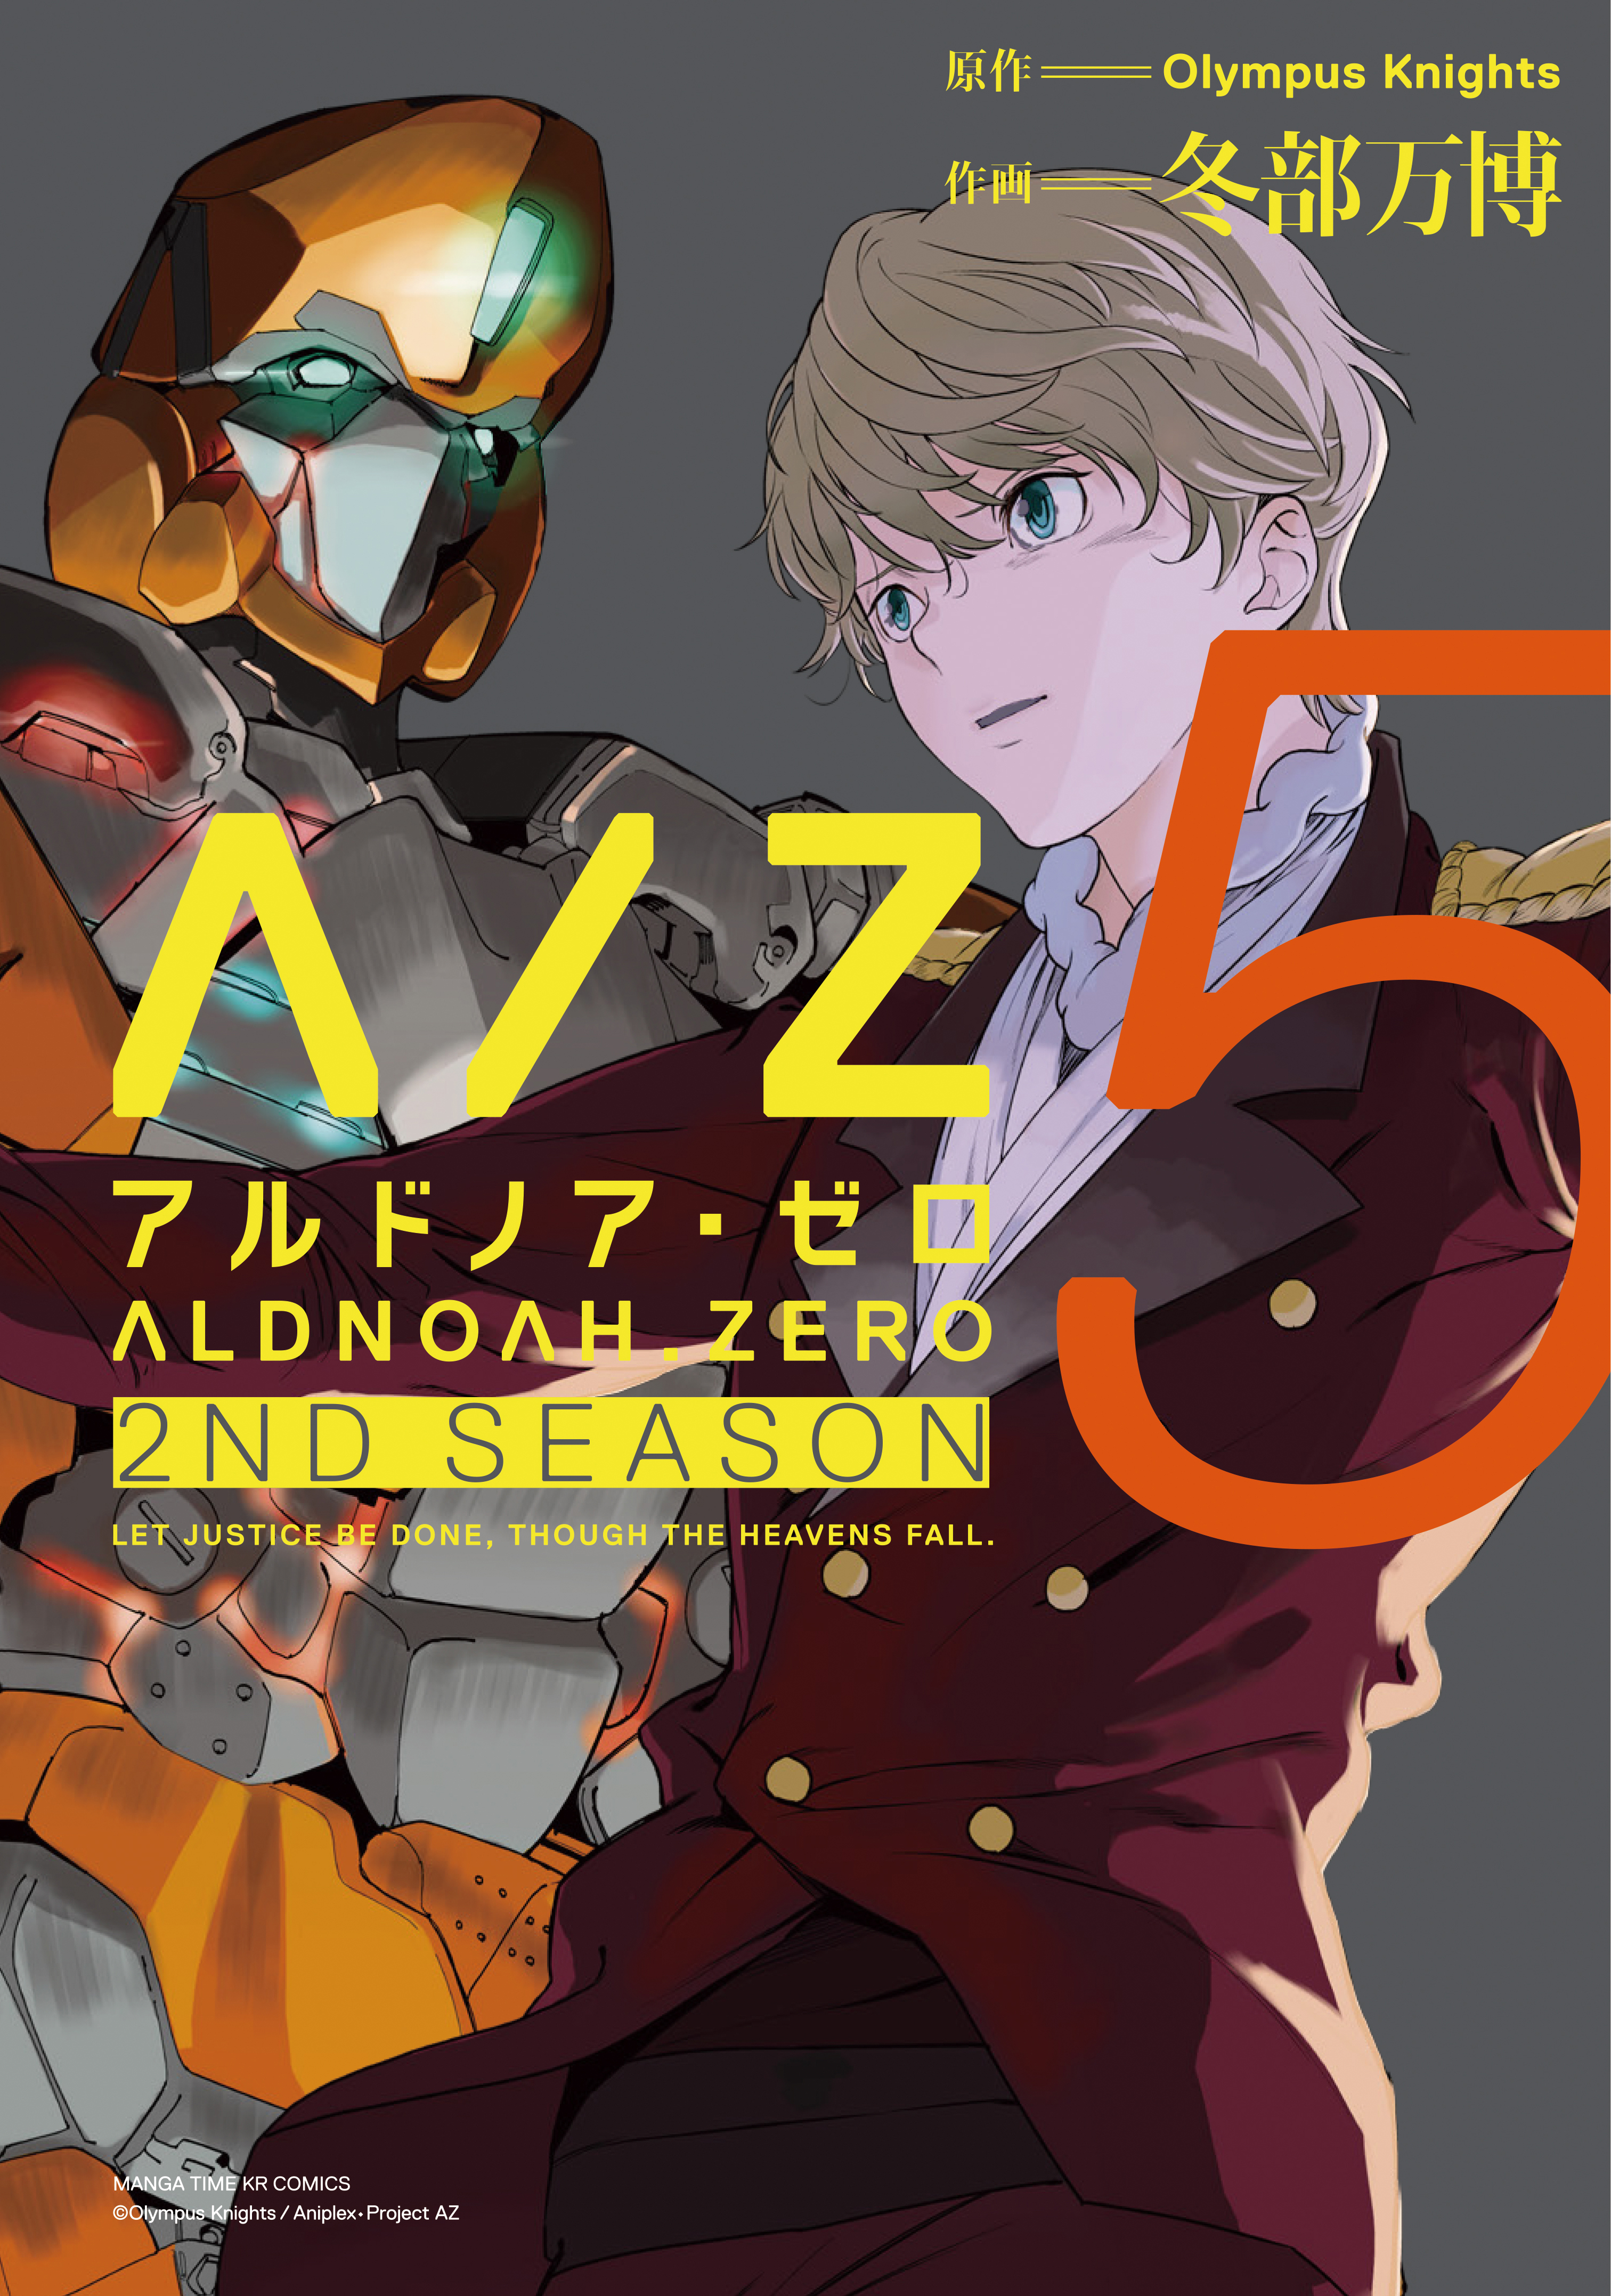 Aldnoah Zero Episode 5 アルドノア・ゼロ Anime Review - I Respect The King 